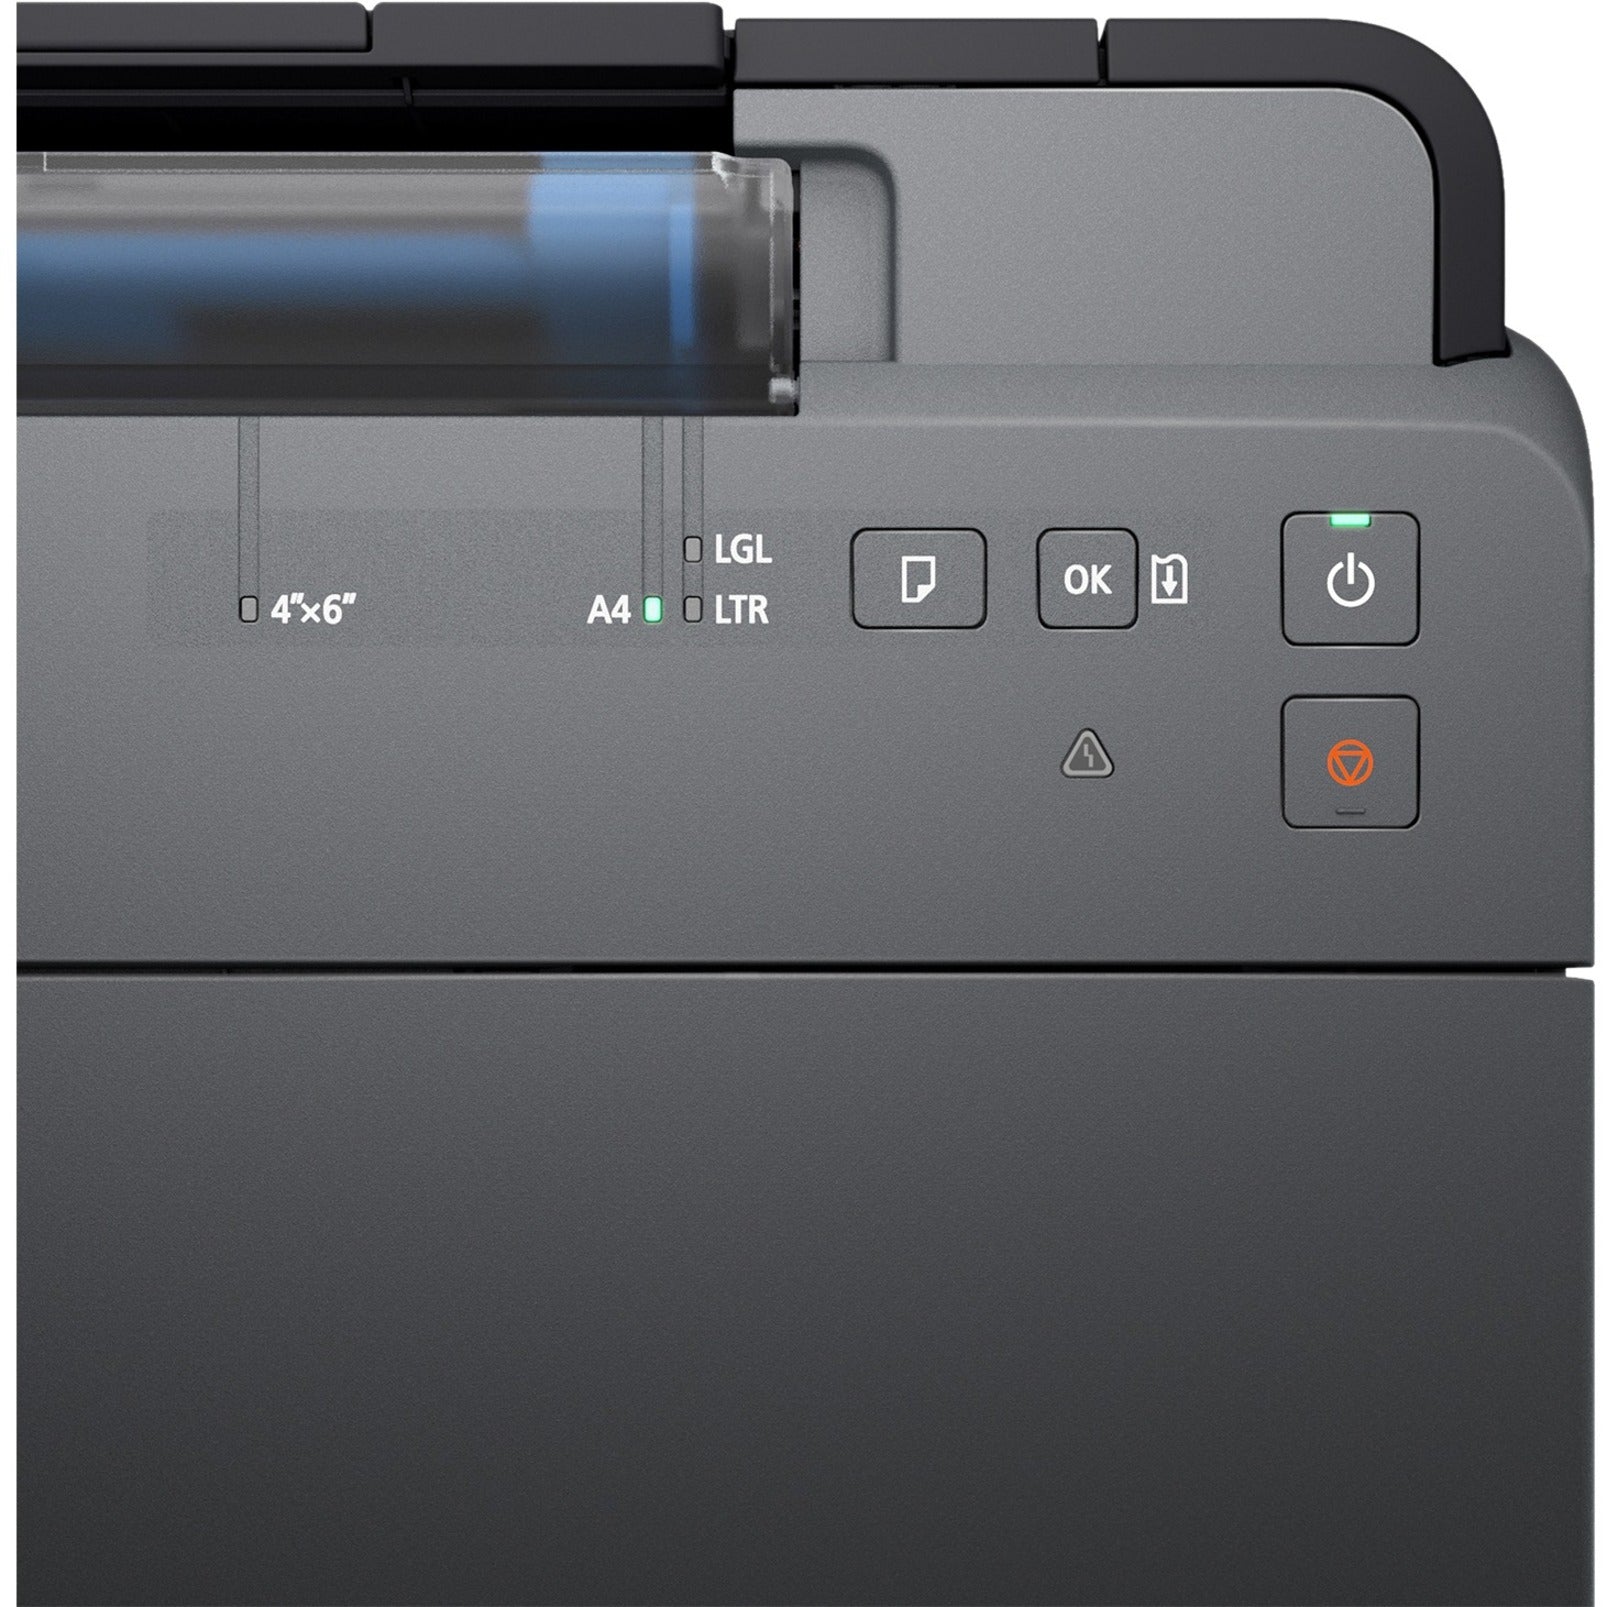 Canon 4469C002 PIXMA G1220 MegaTank Inkjet Printer, Color, 1 Year Warranty, Energy Star, USB